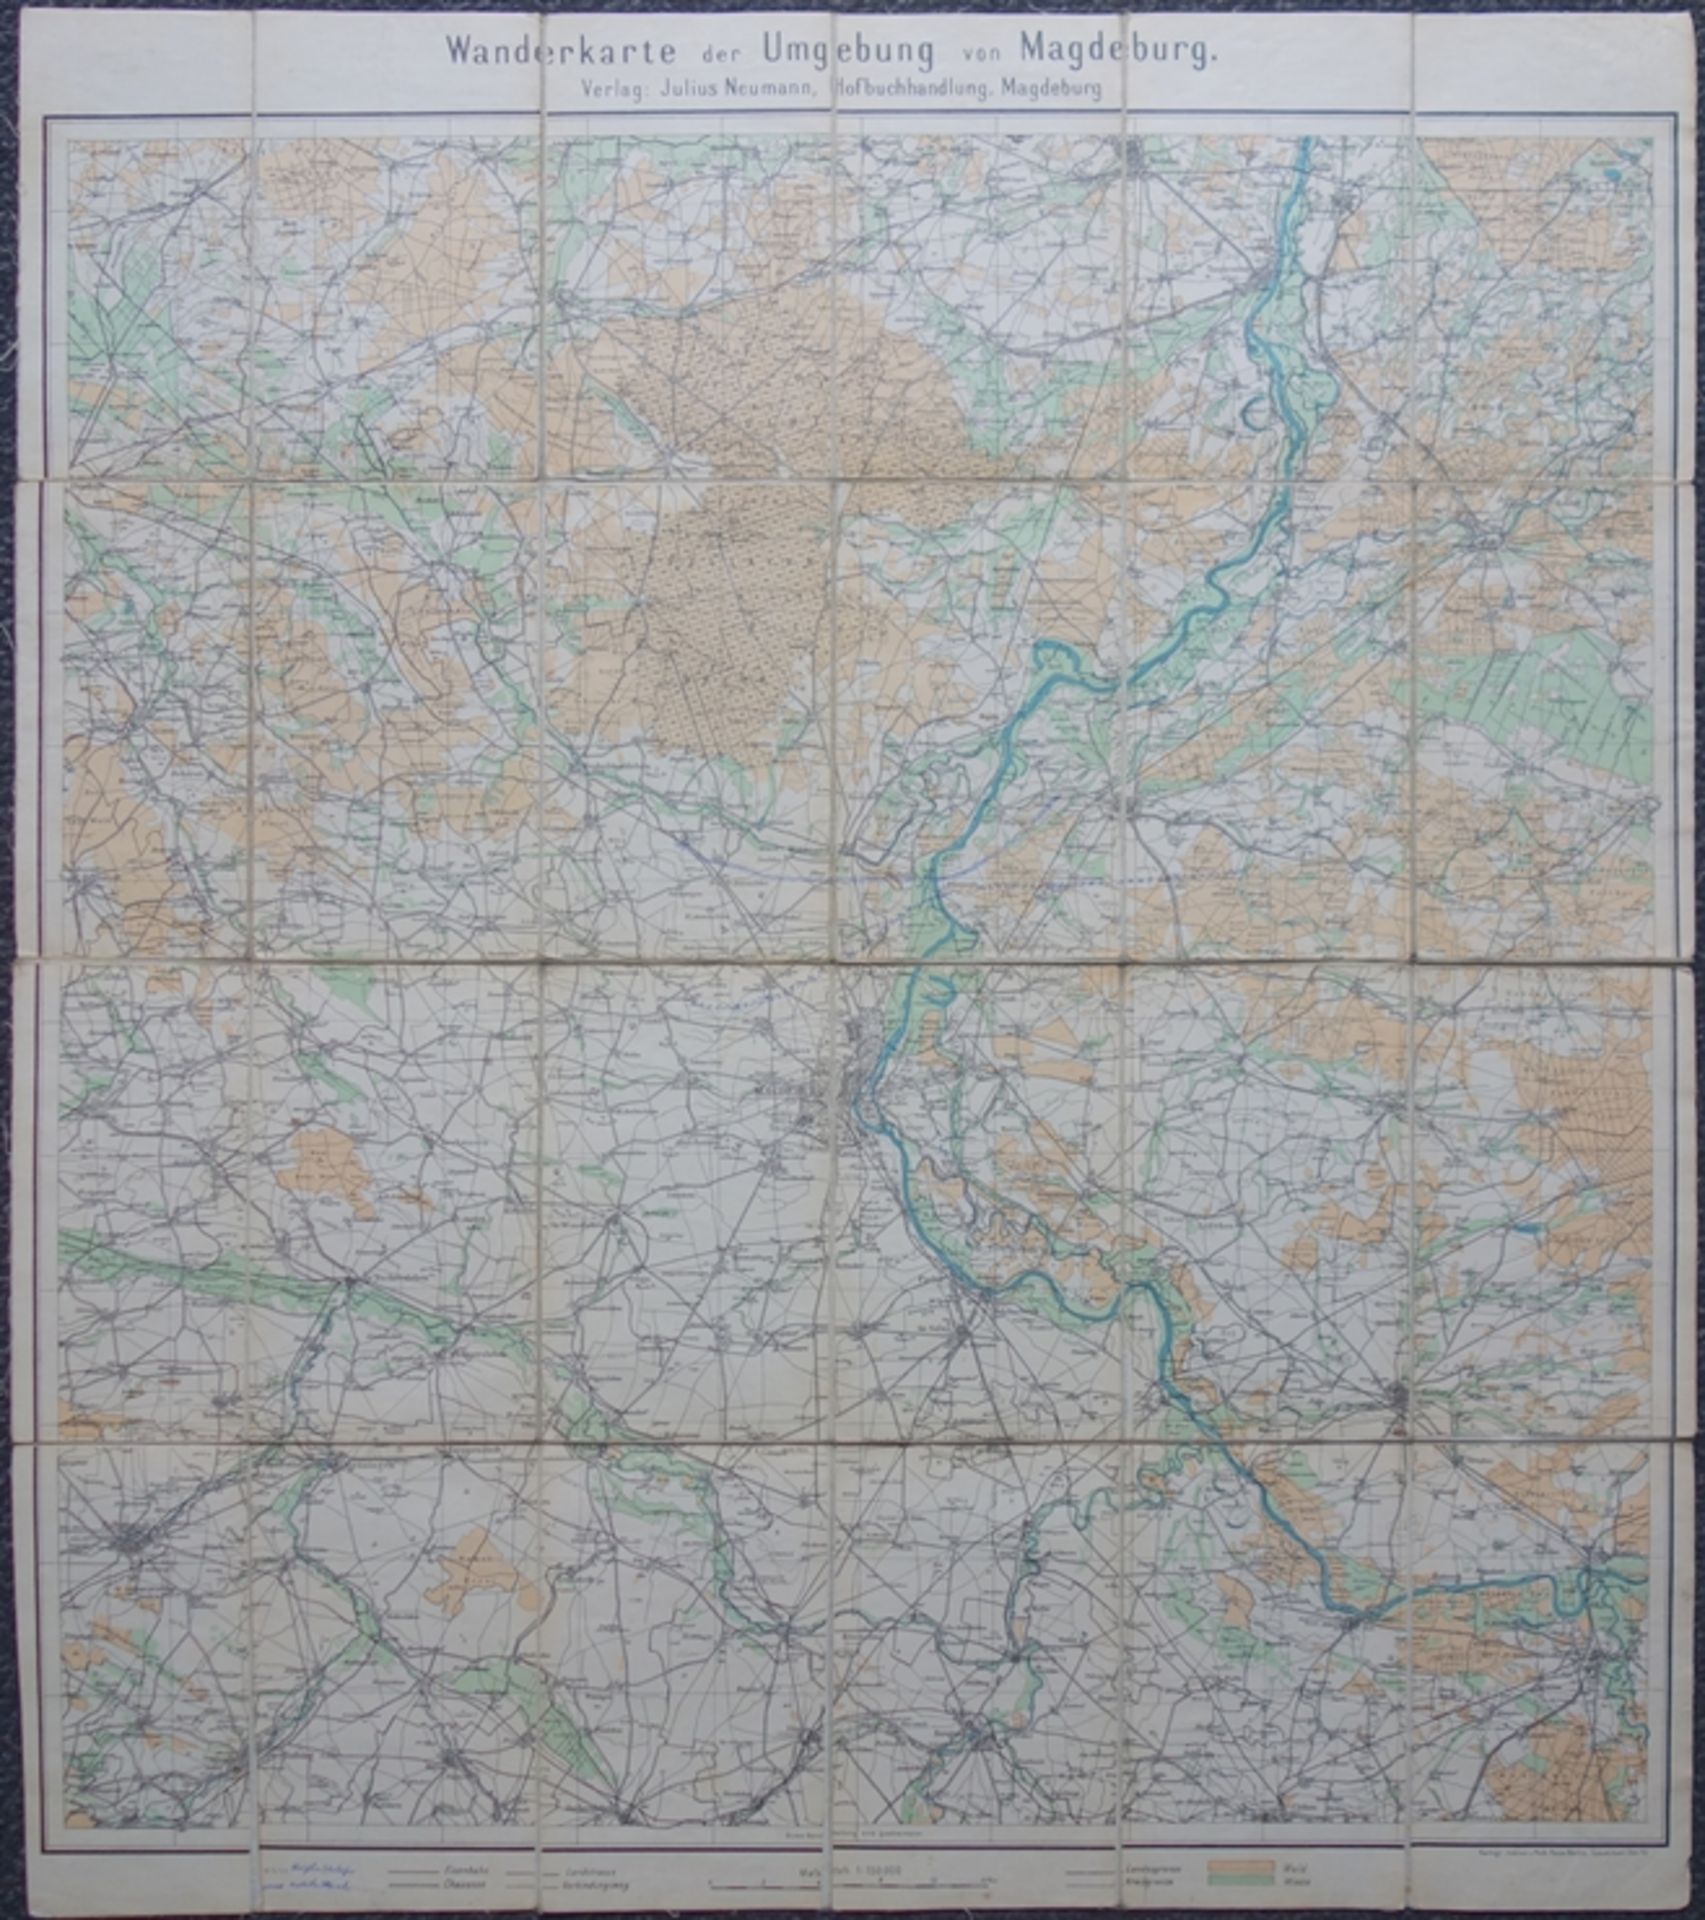 Wanderkarte der Umgebung von Magdeburg, um 1900, Maßstab 1:150.000